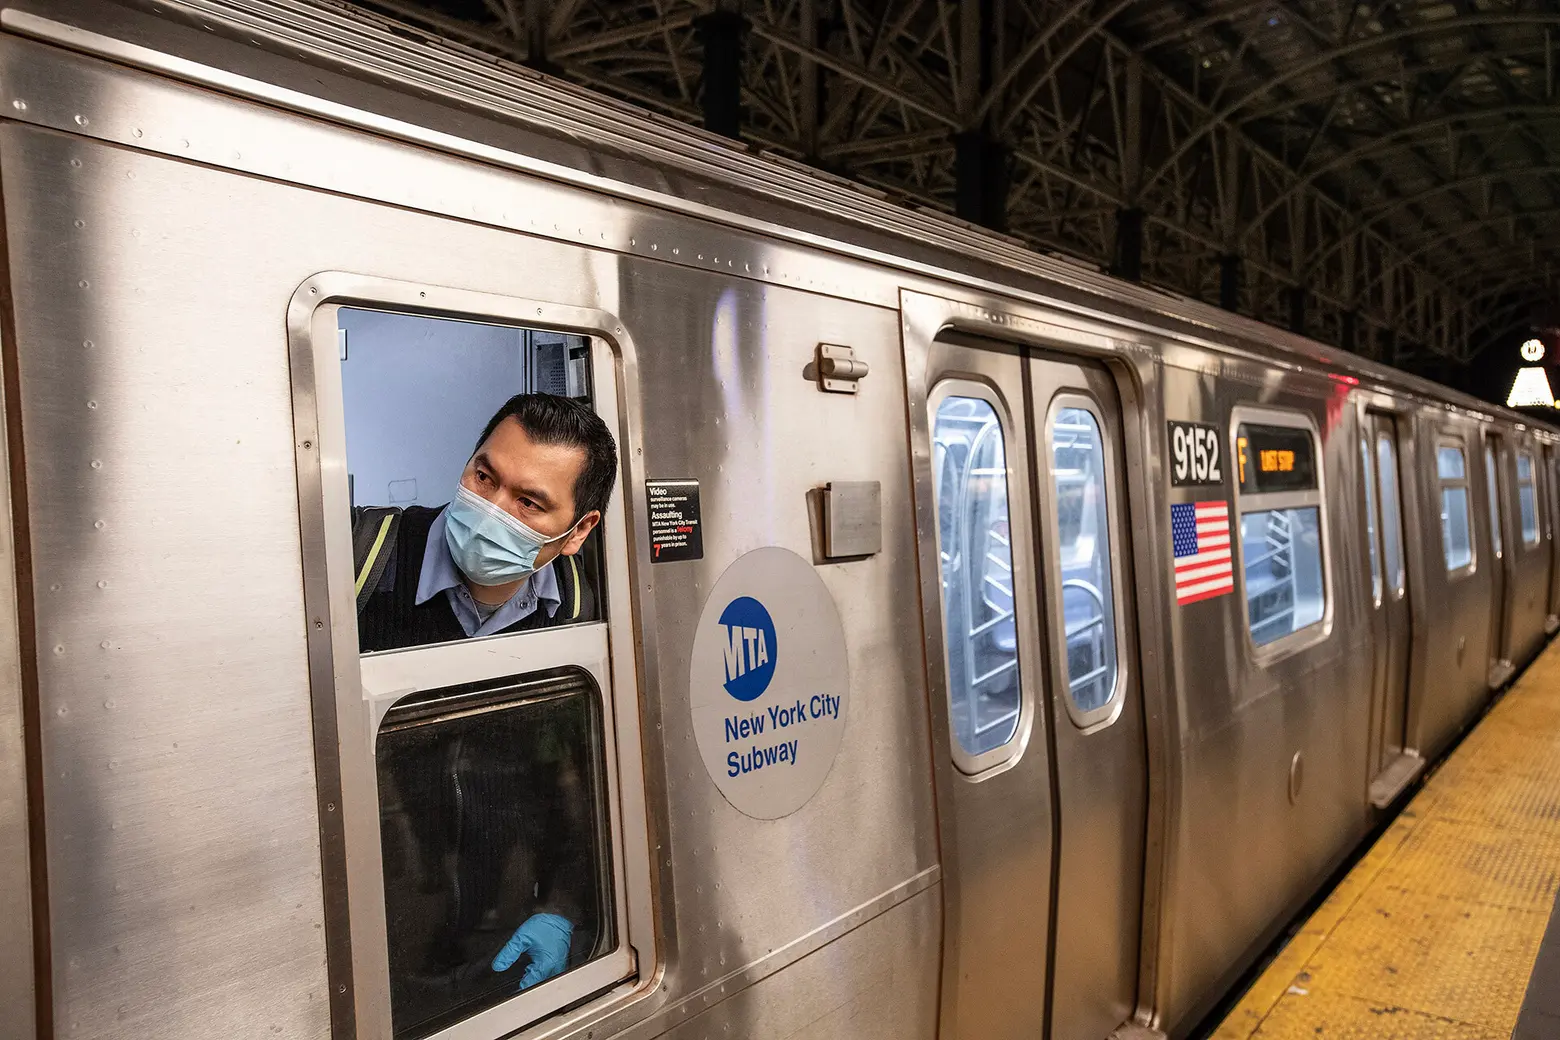 NYC-area transit agencies seek ways to restore ridership post-Covid